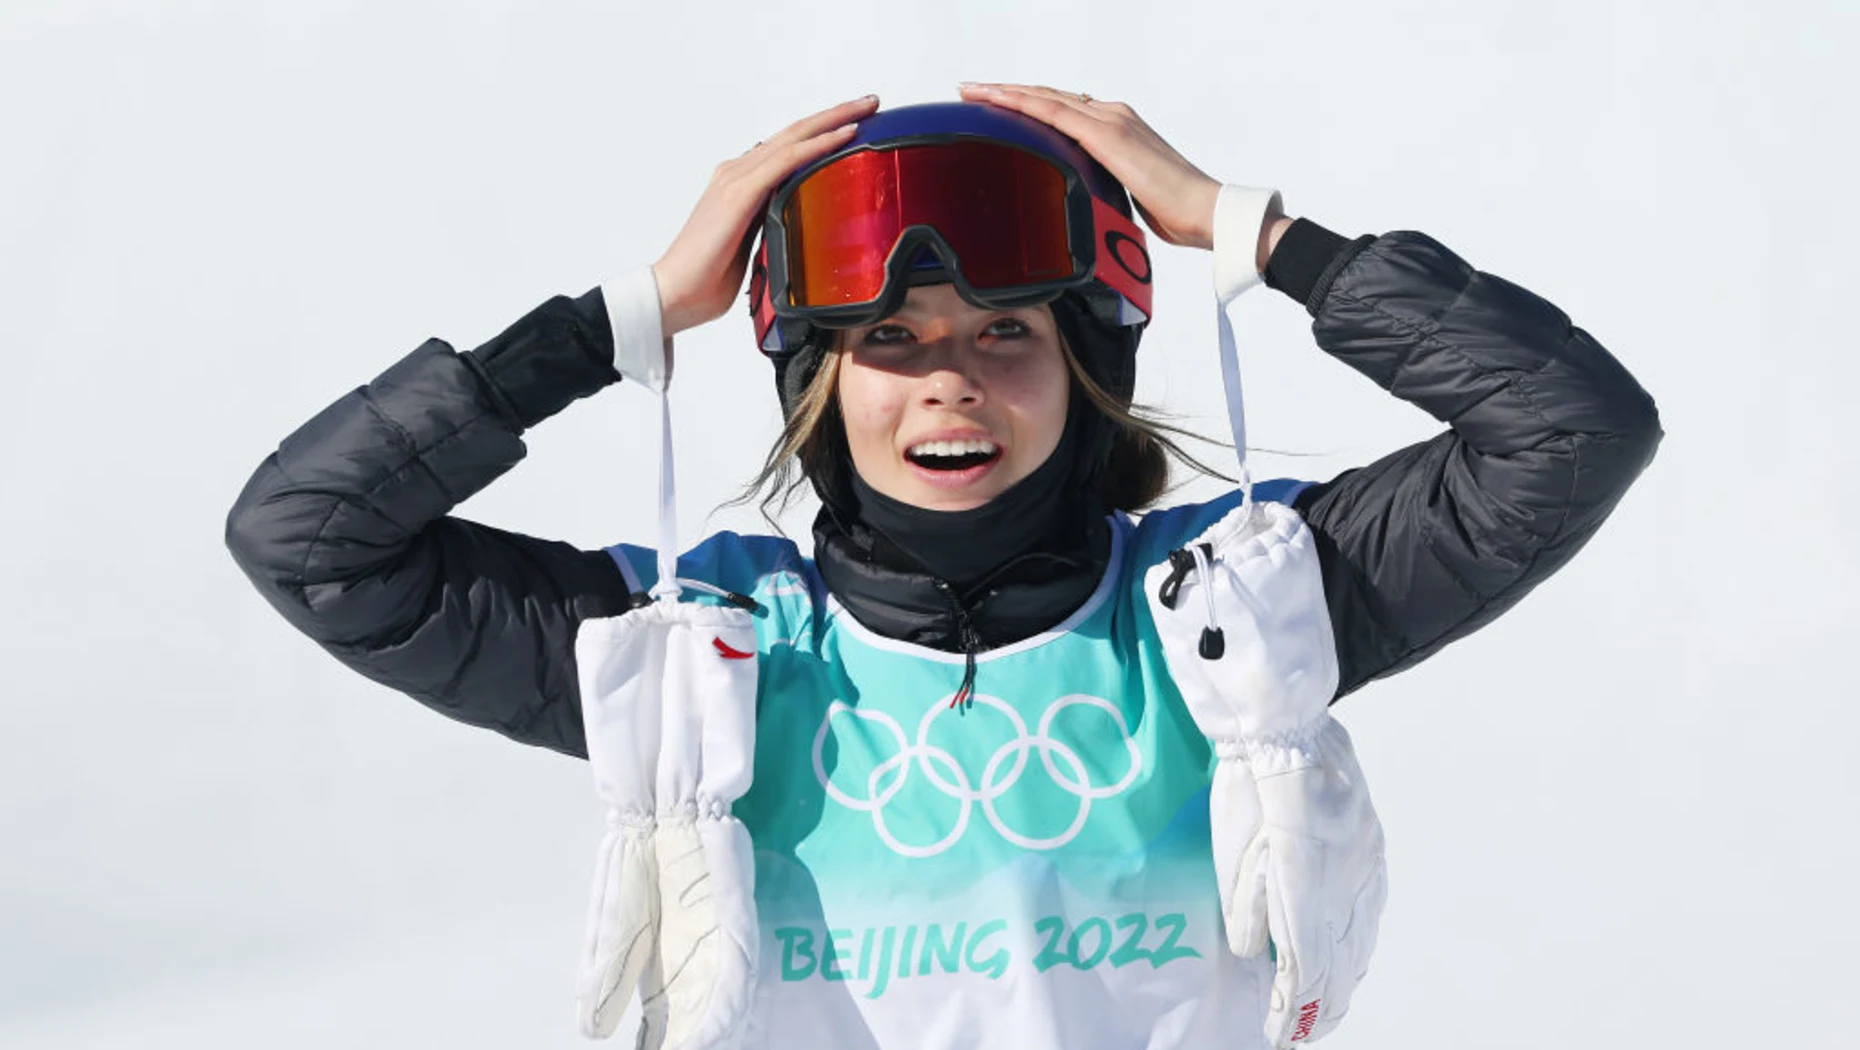 Medals update: Ailing (Eileen) Gu soars best to scoop first women’s freeski big air gold